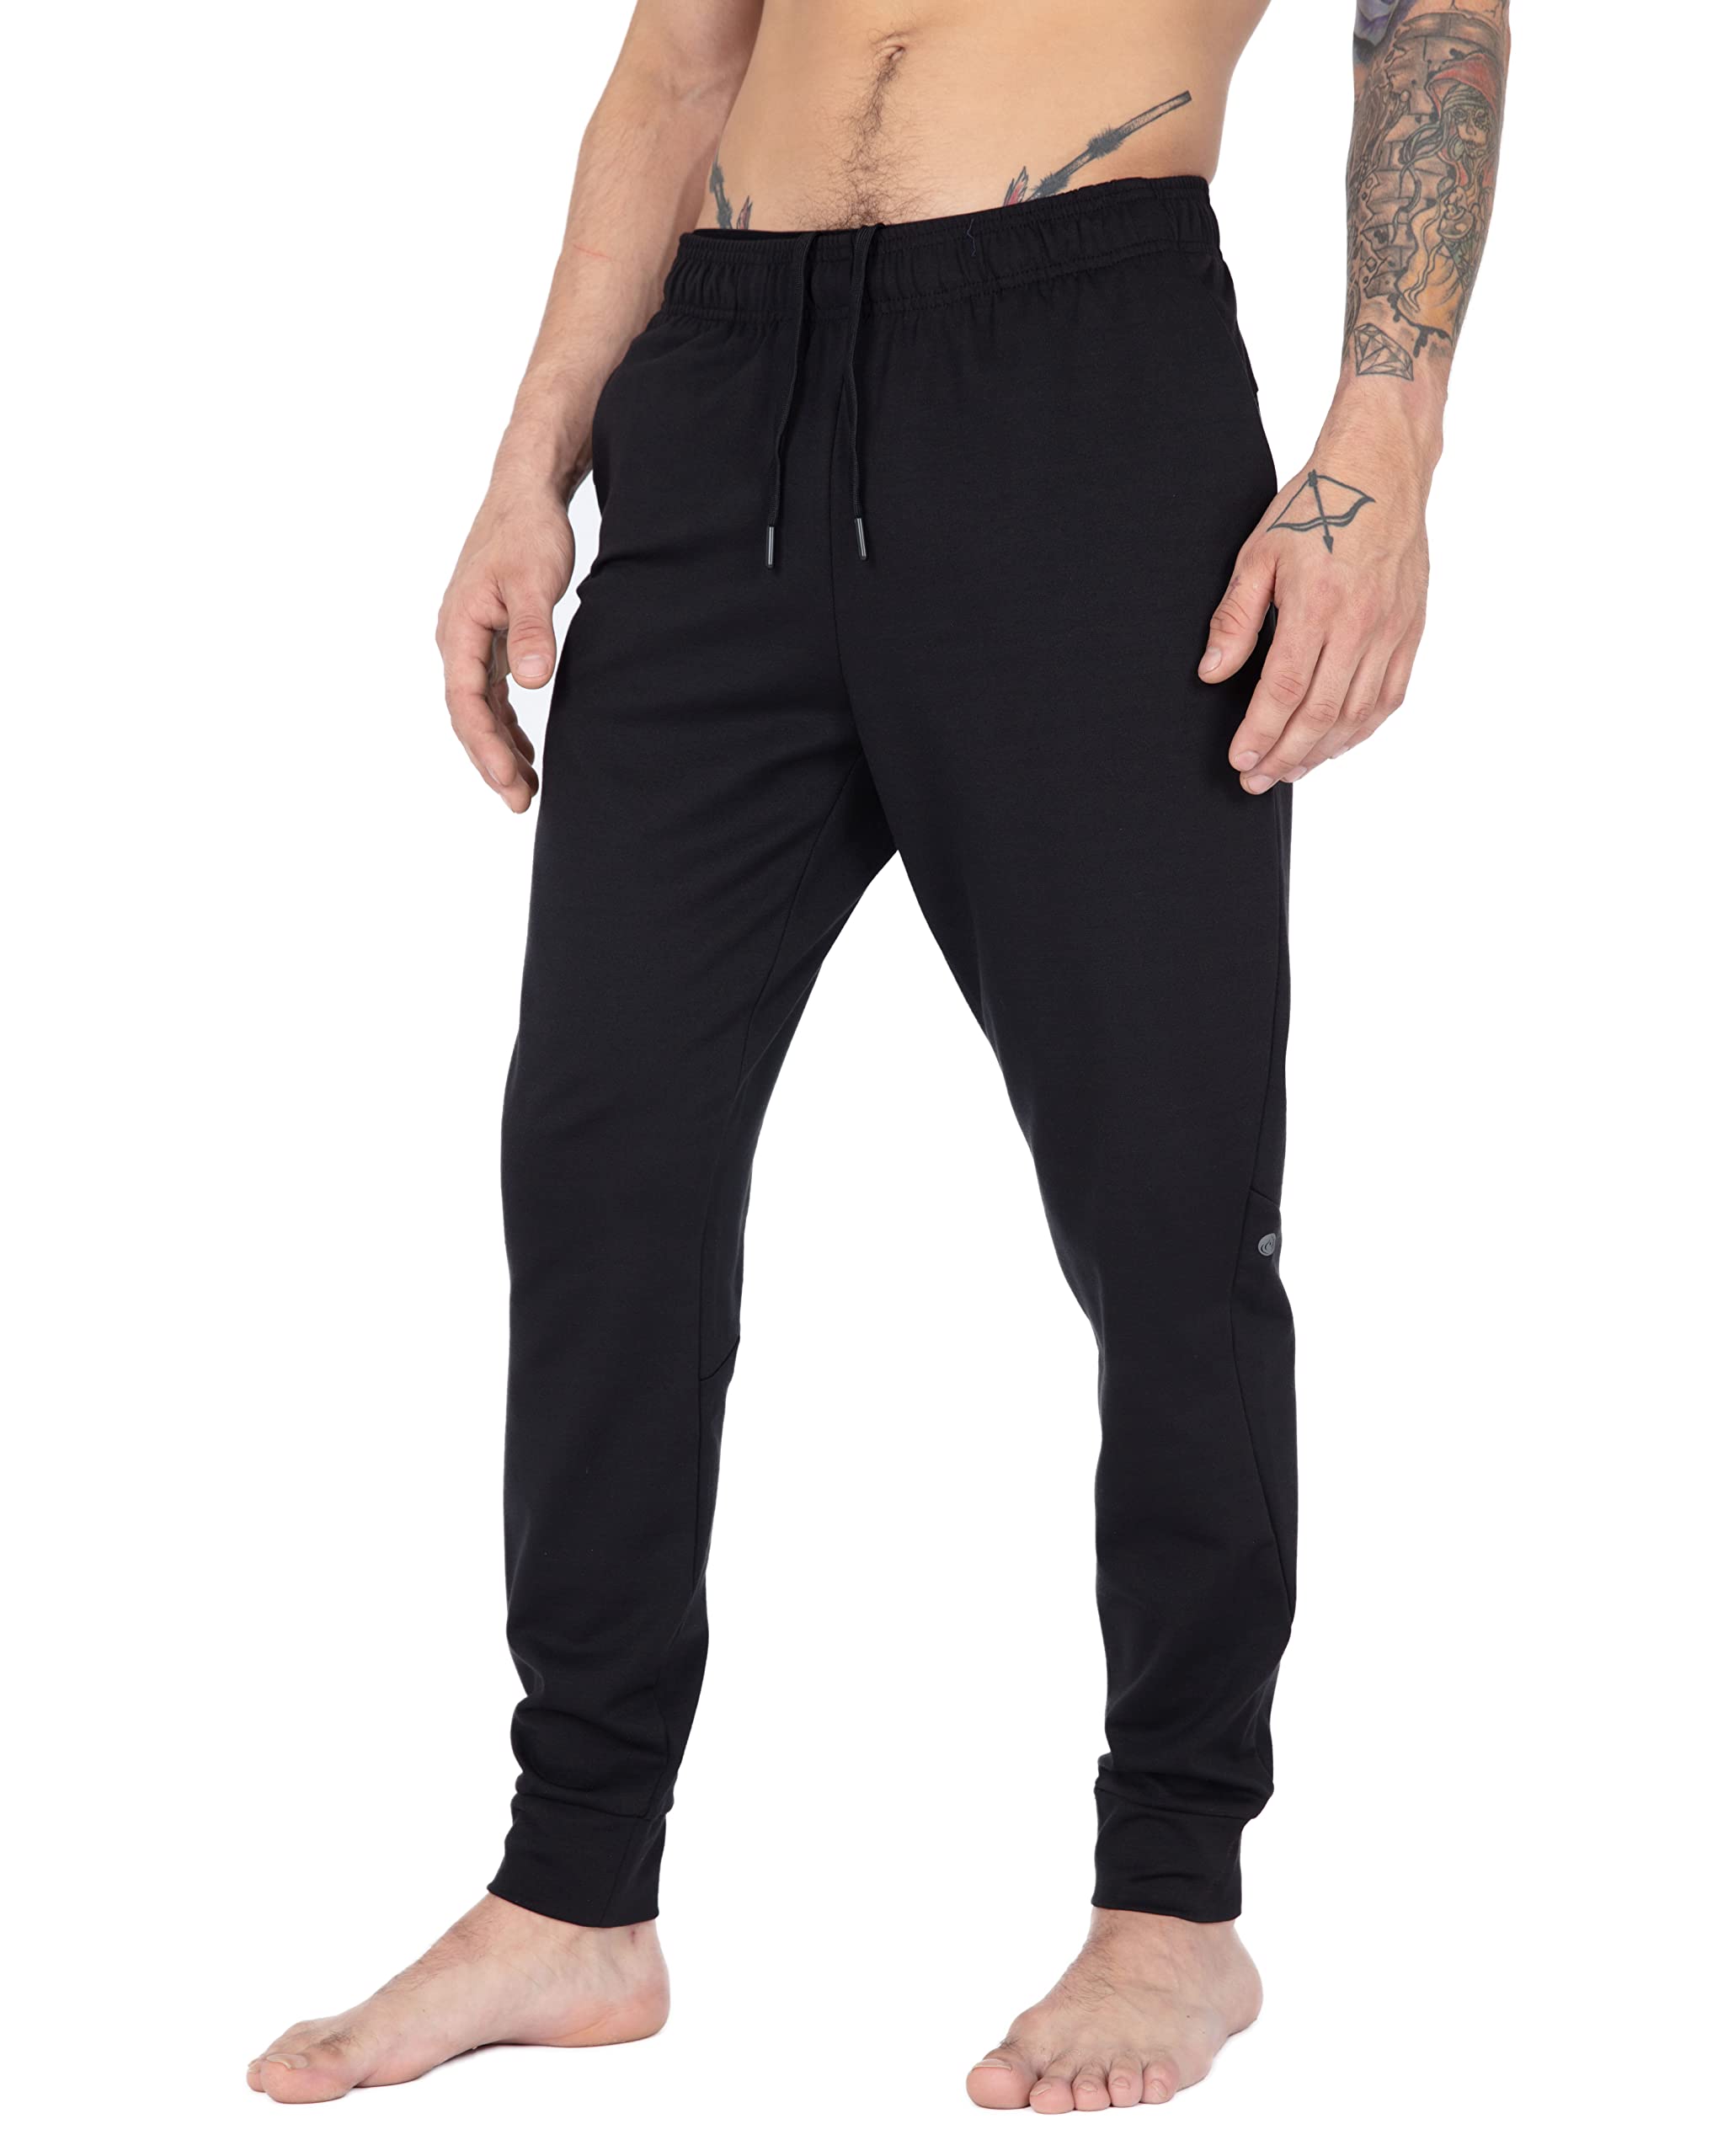 Buy Apana men sport fit plain drawstring sweatpants black Online